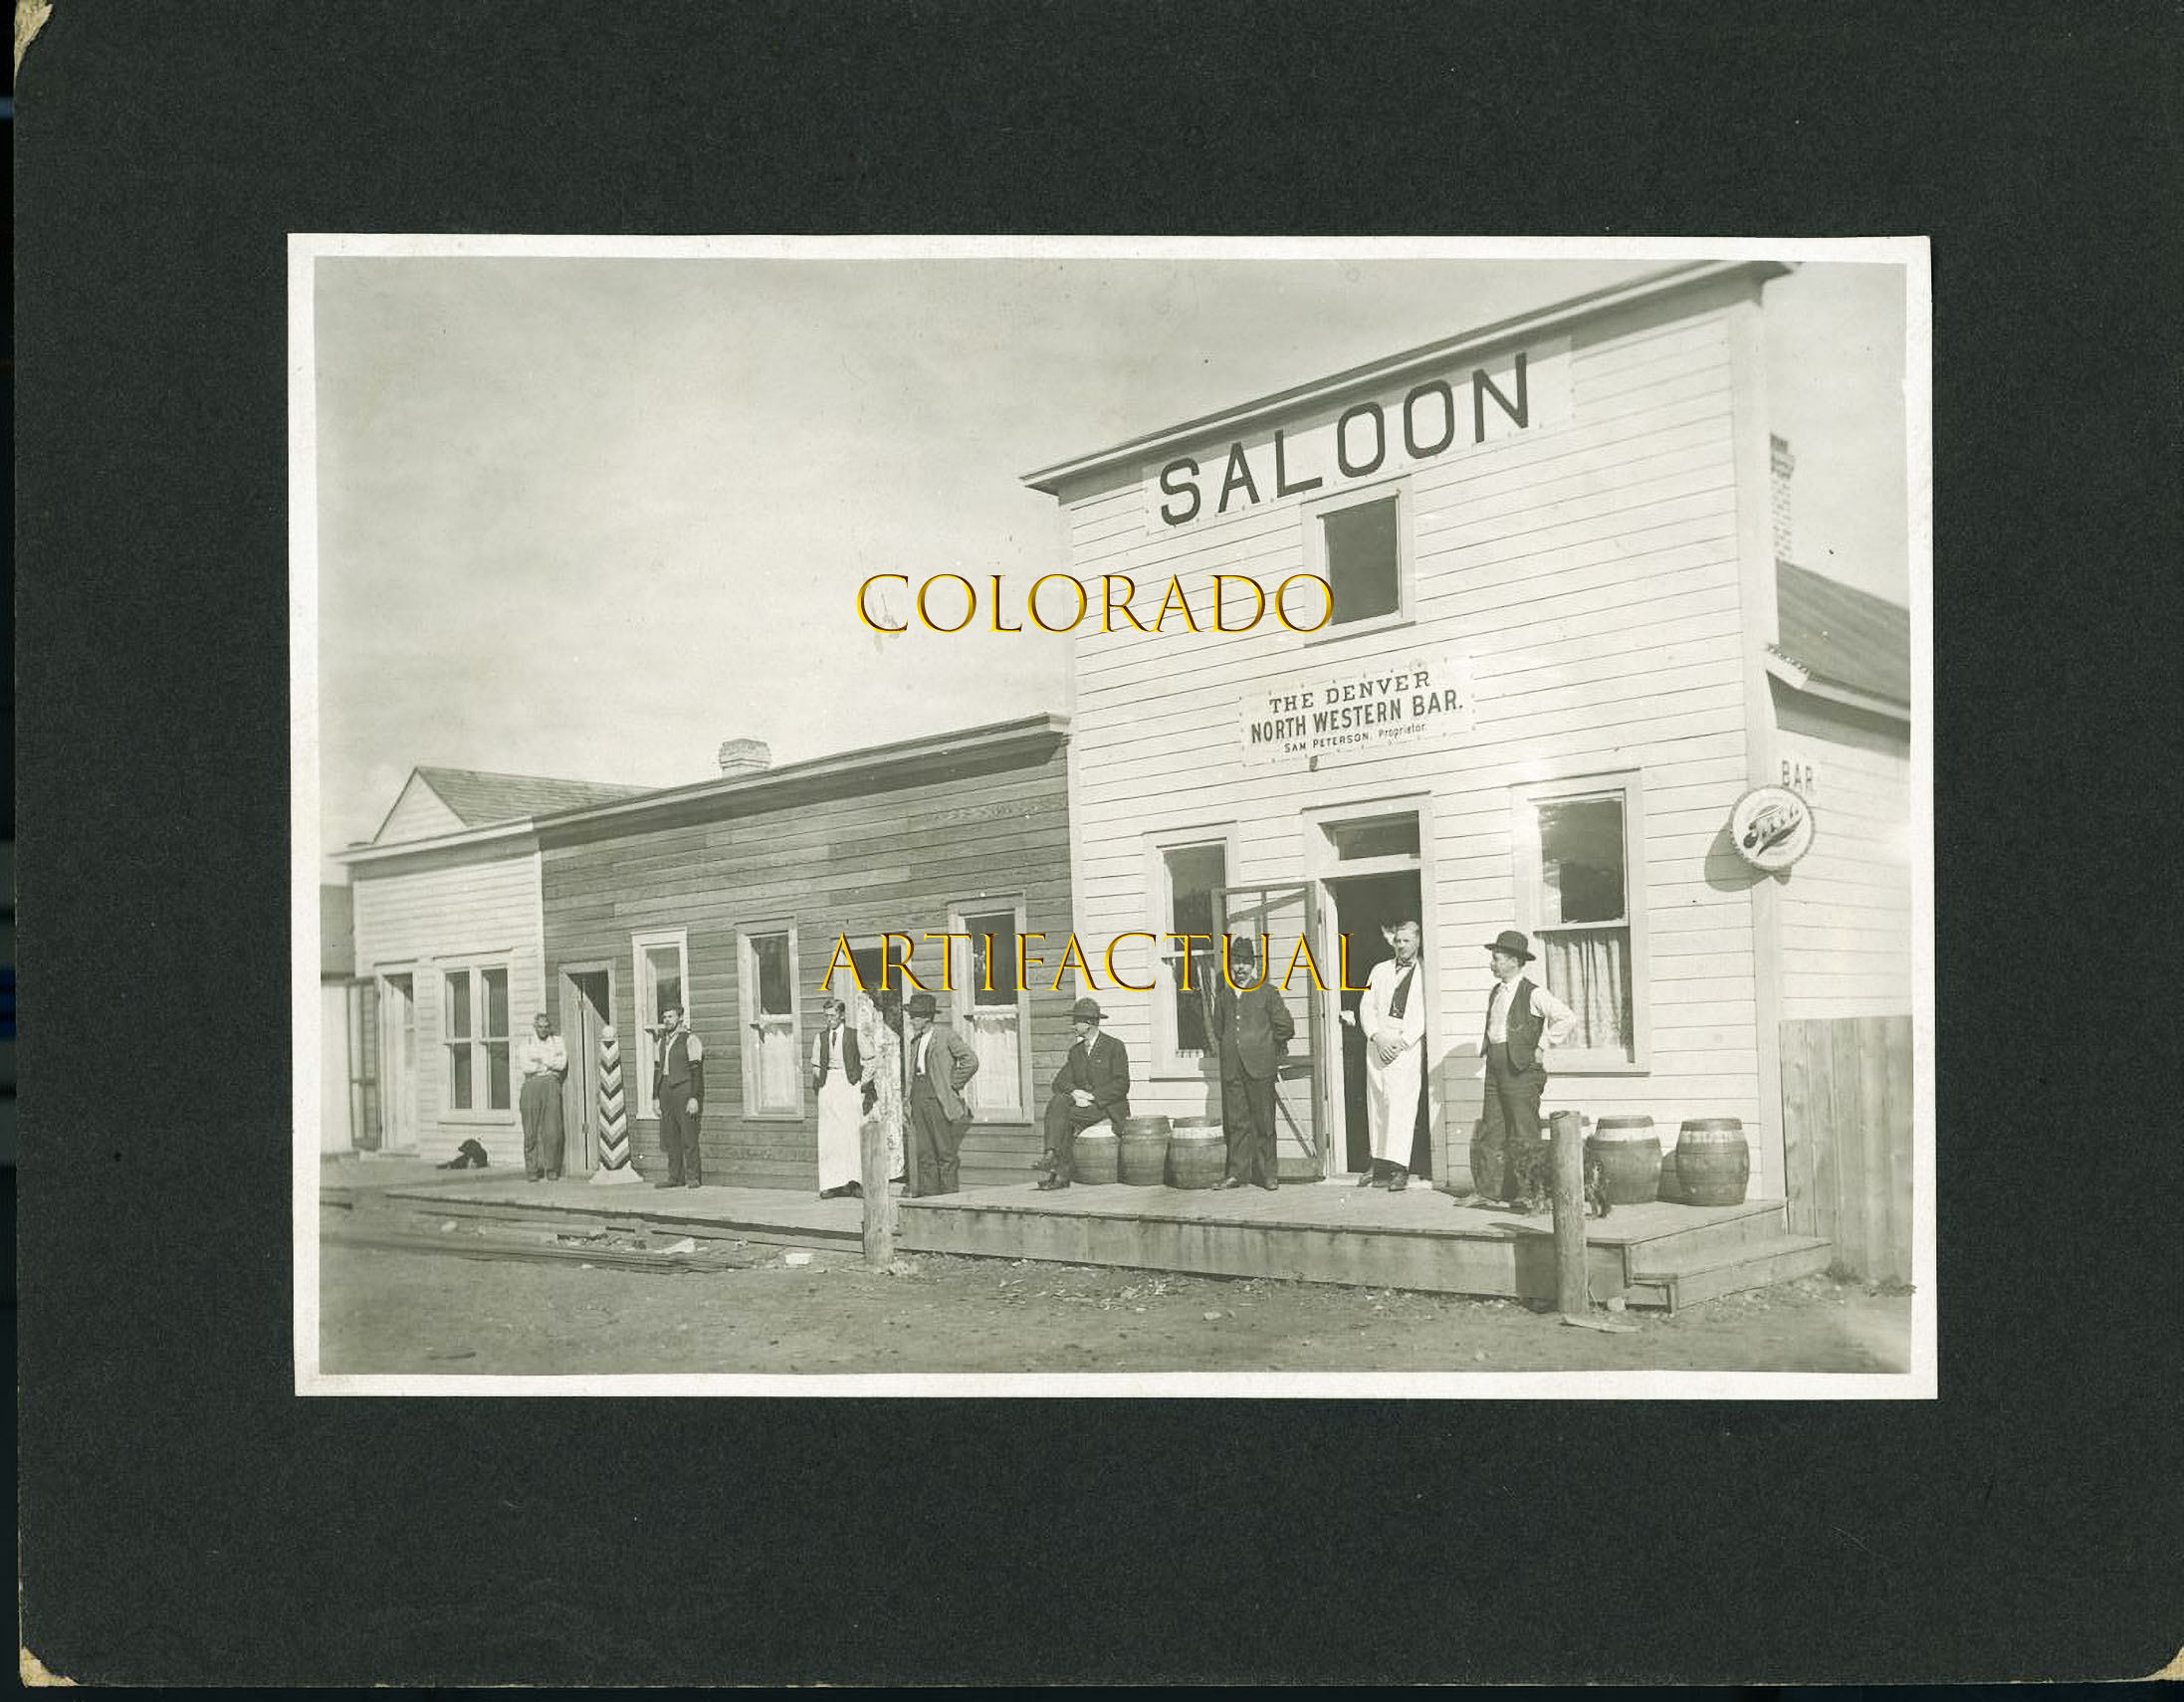 Colorado saloon original photographs Denver Northwestern Bar Sam Peterson 1909